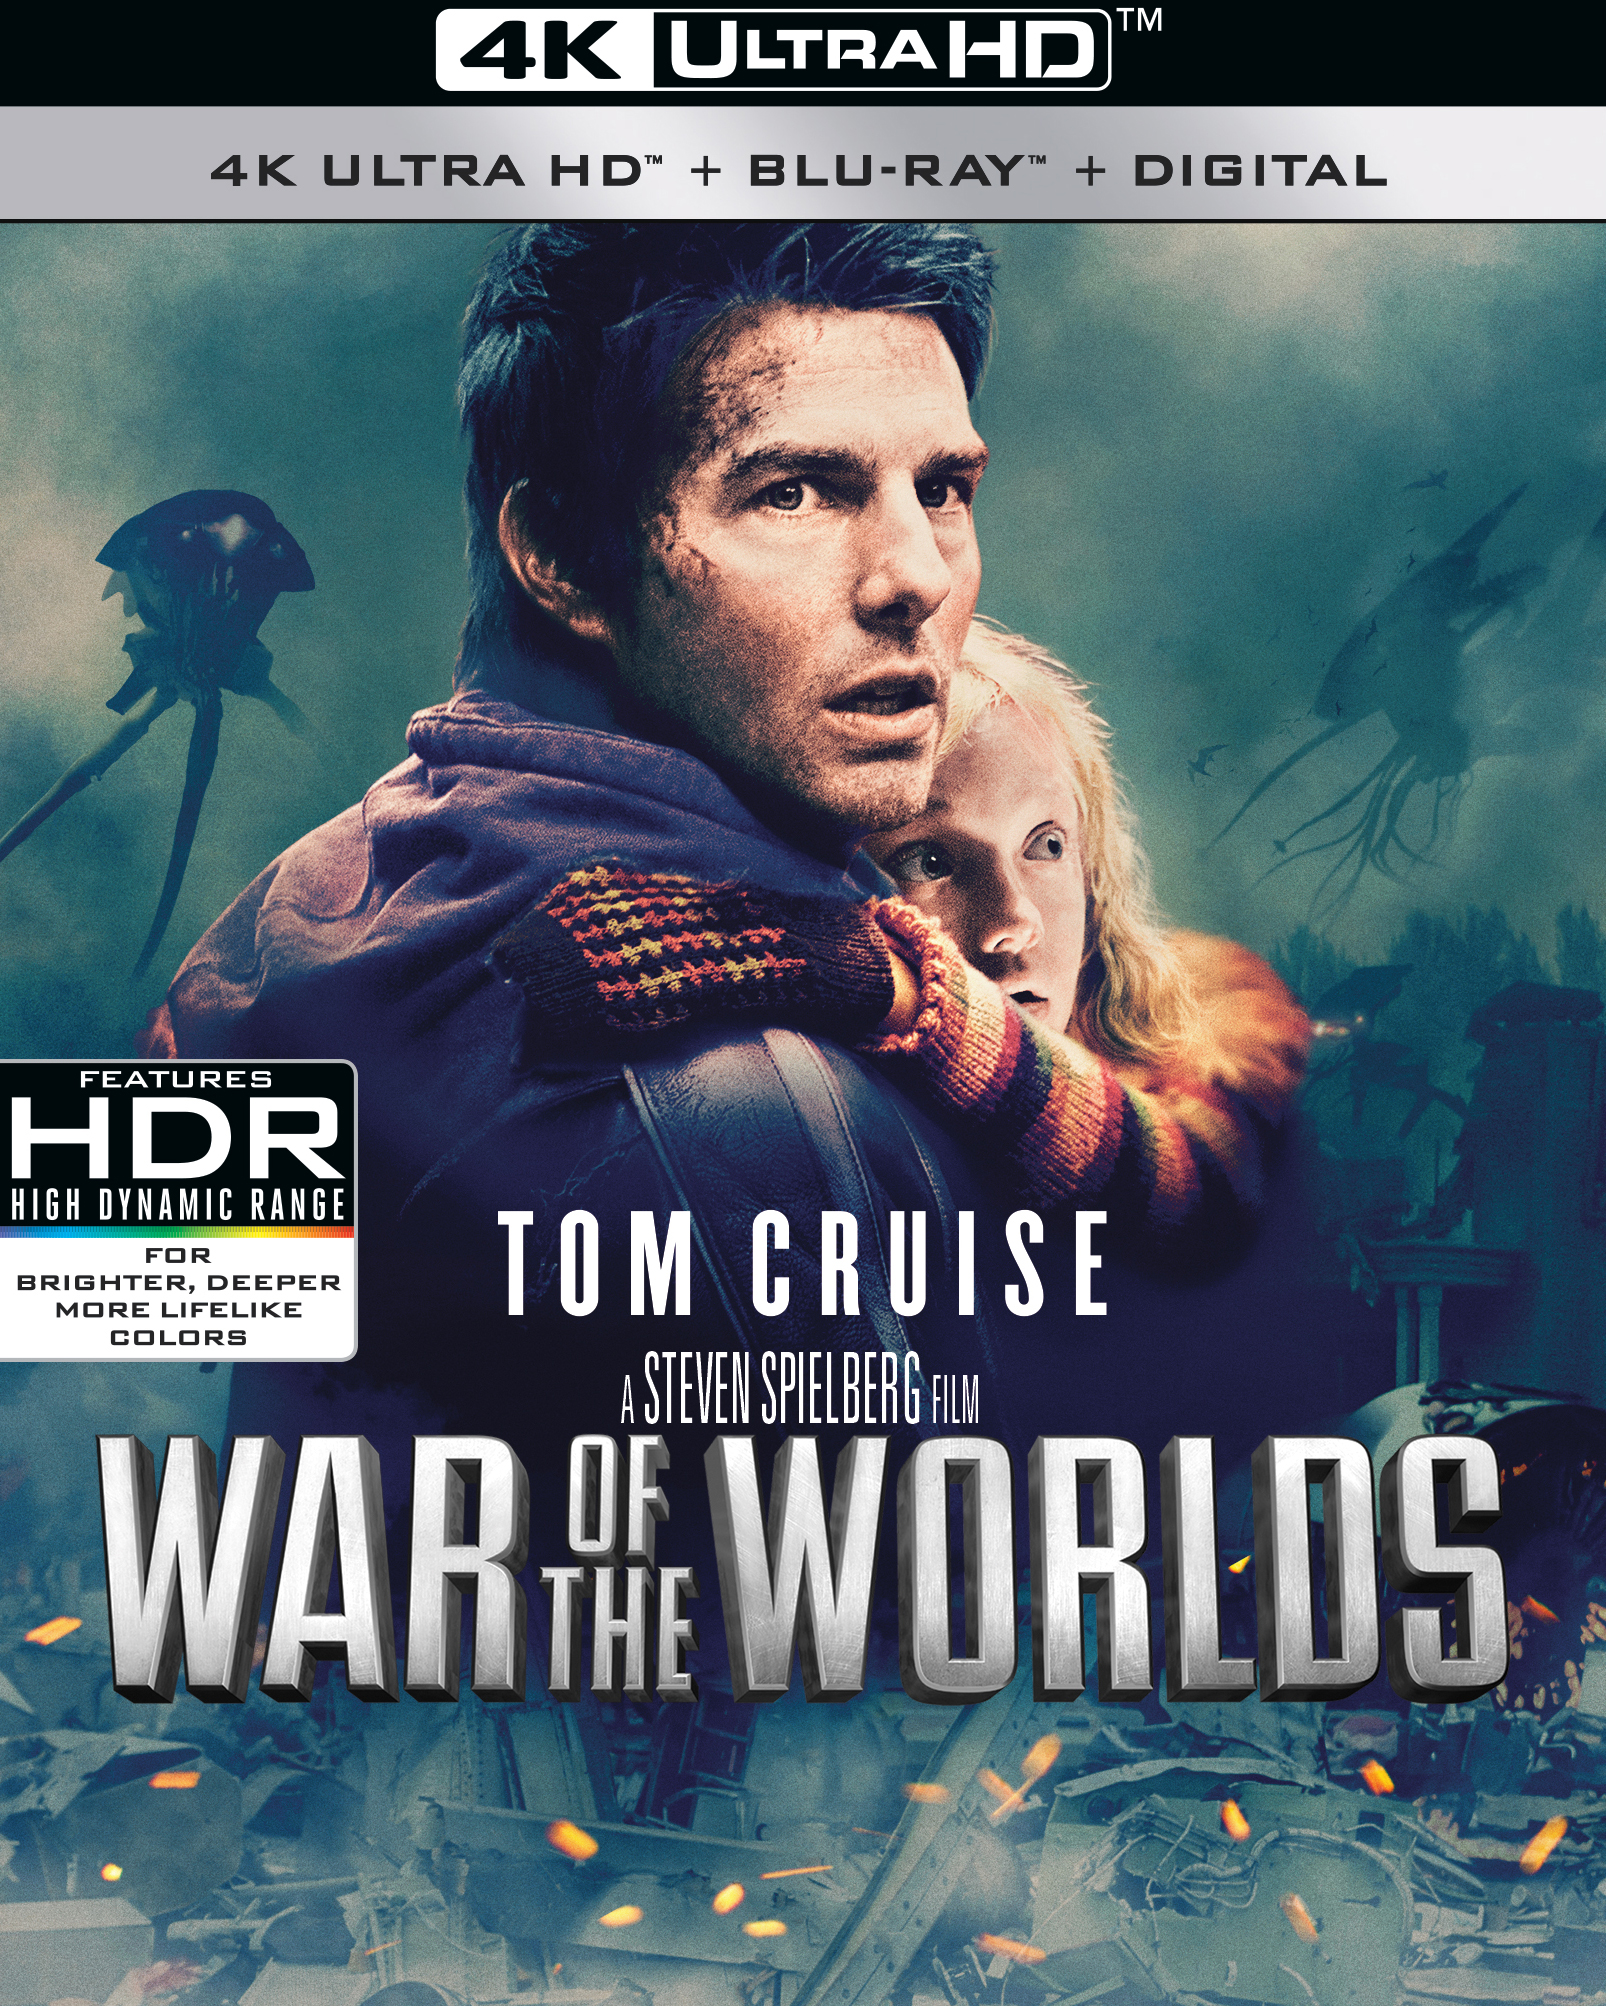 Stiahni si UHD Filmy Valka svetu / War of the Worlds (2005)(CZ/EN)(2160p 4K BRRip) = CSFD 72%